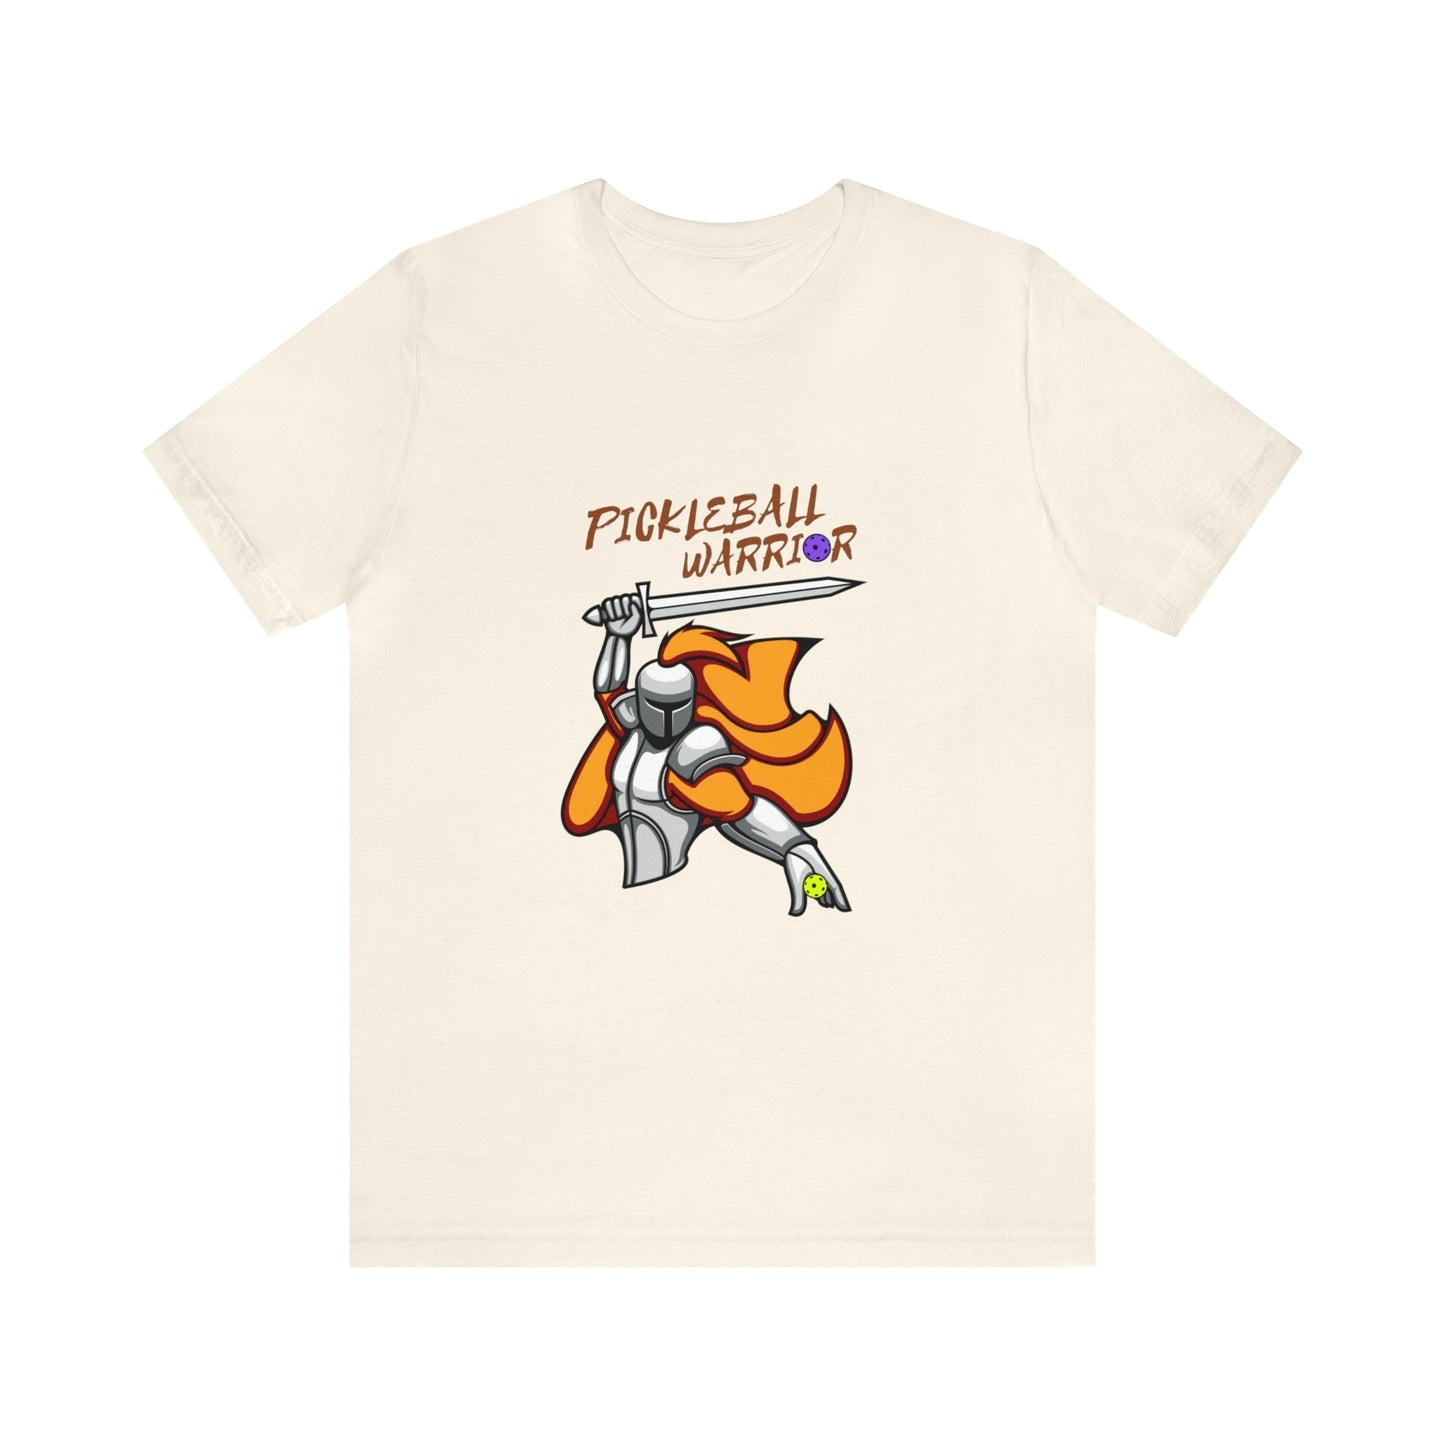 'Pickleball Warrior' T-Shirt